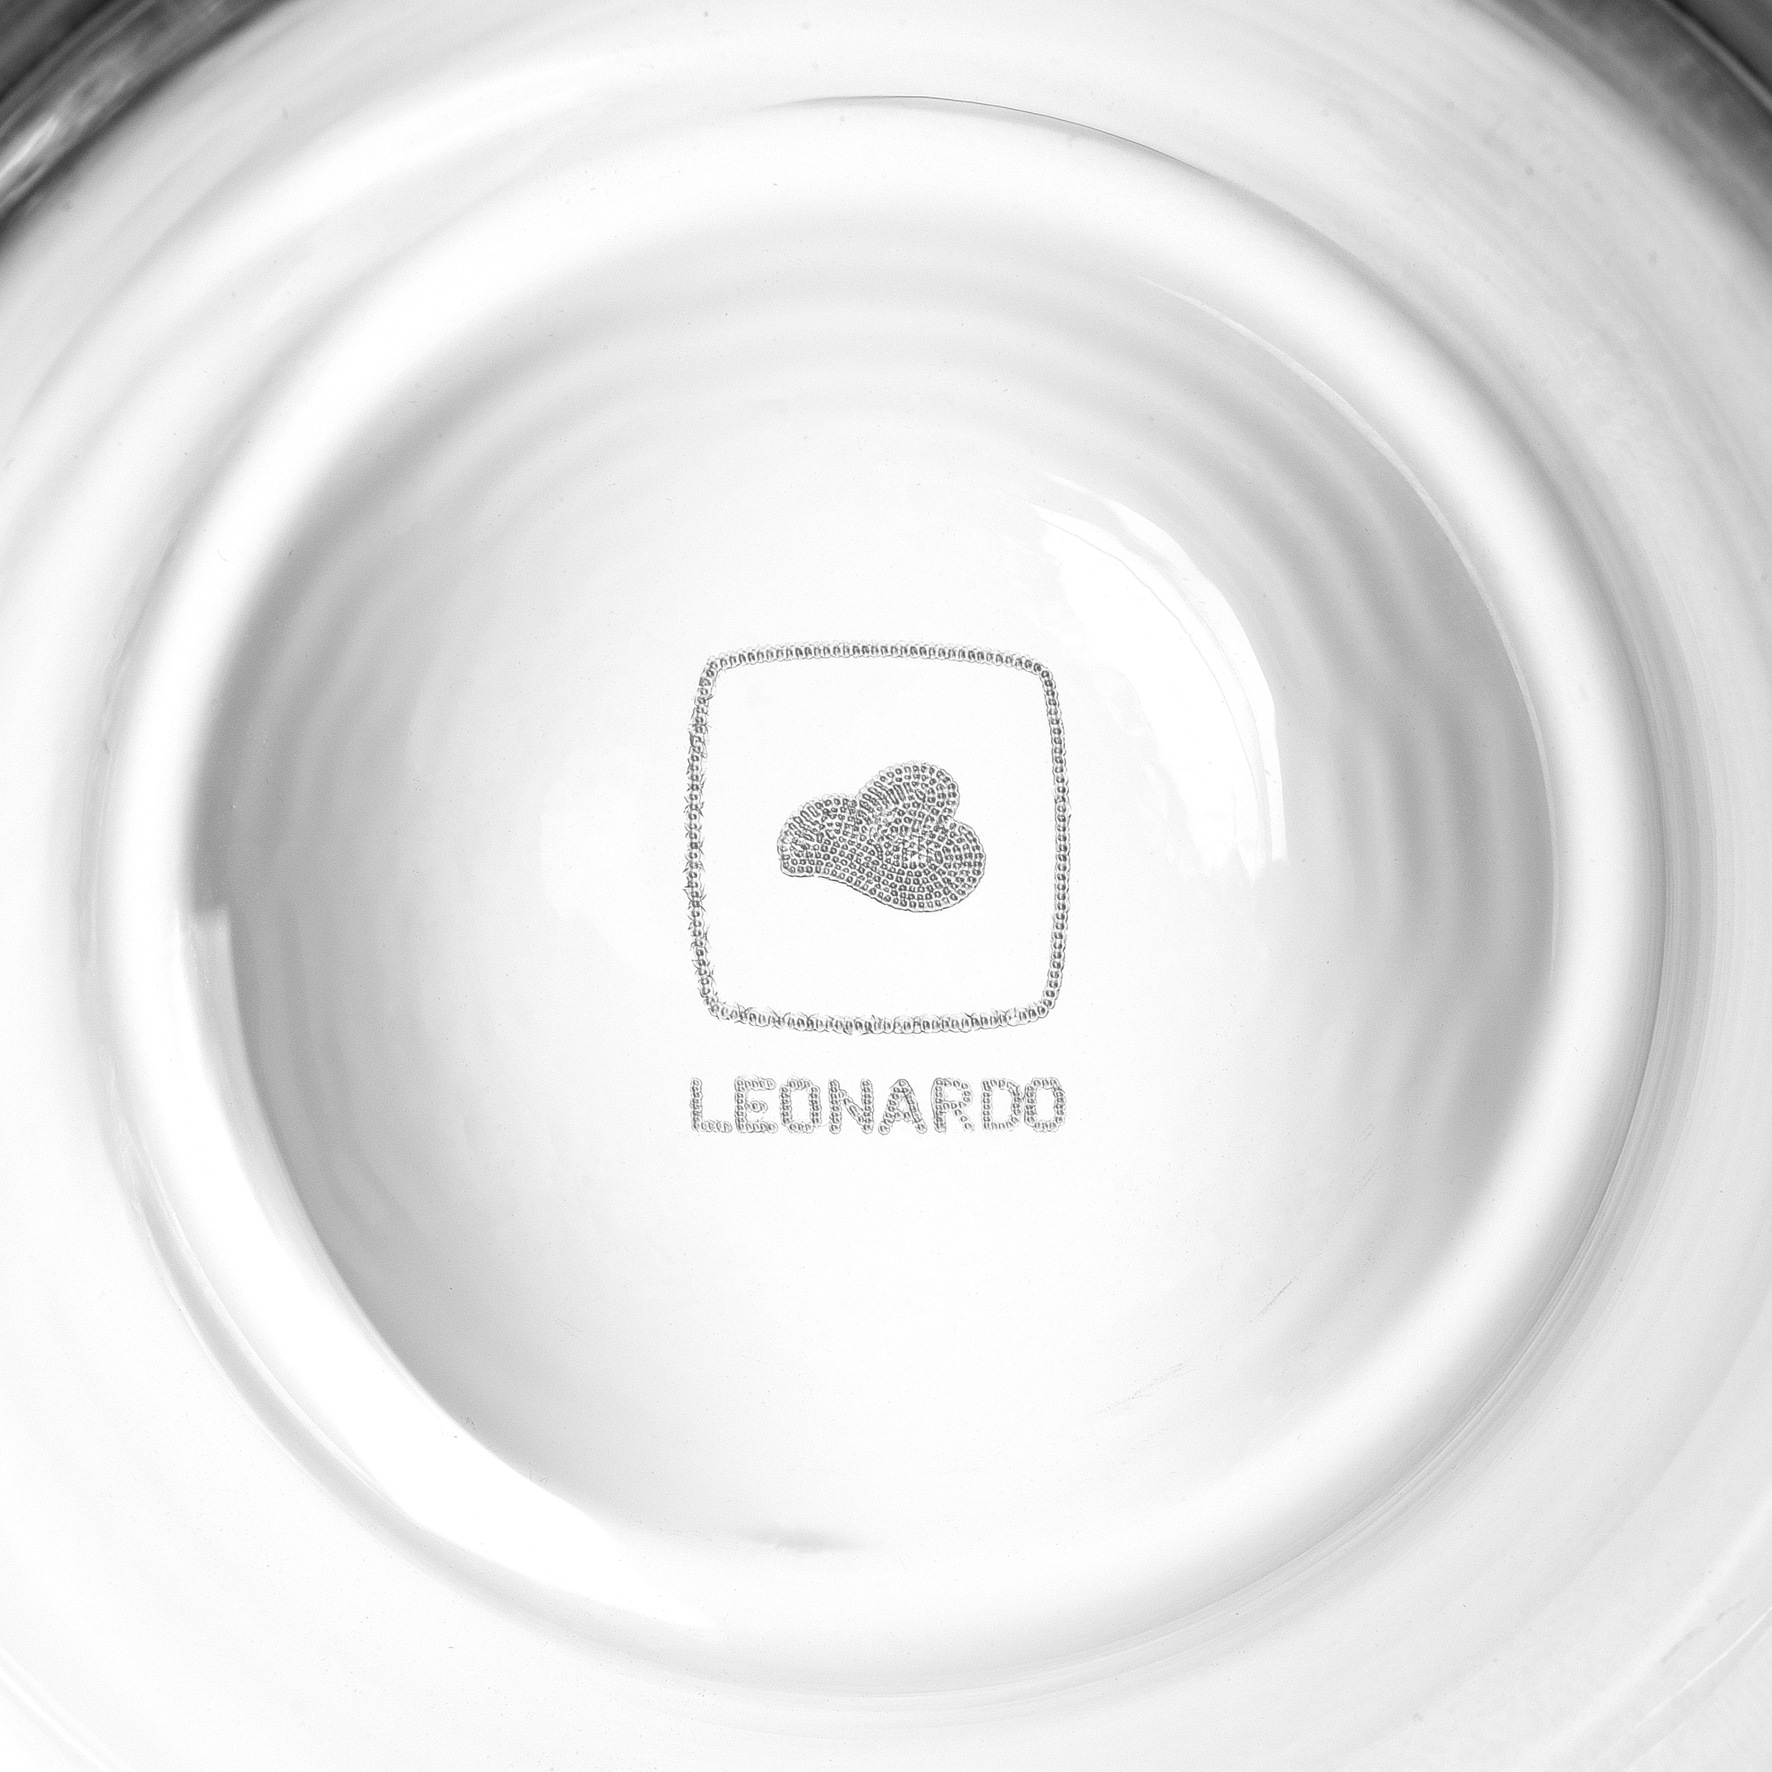 LEONARDO Longdrinkglas »Chateau«, (Set, 6 tlg.), 460 ml, Teqton-Qualität, 6-teilig